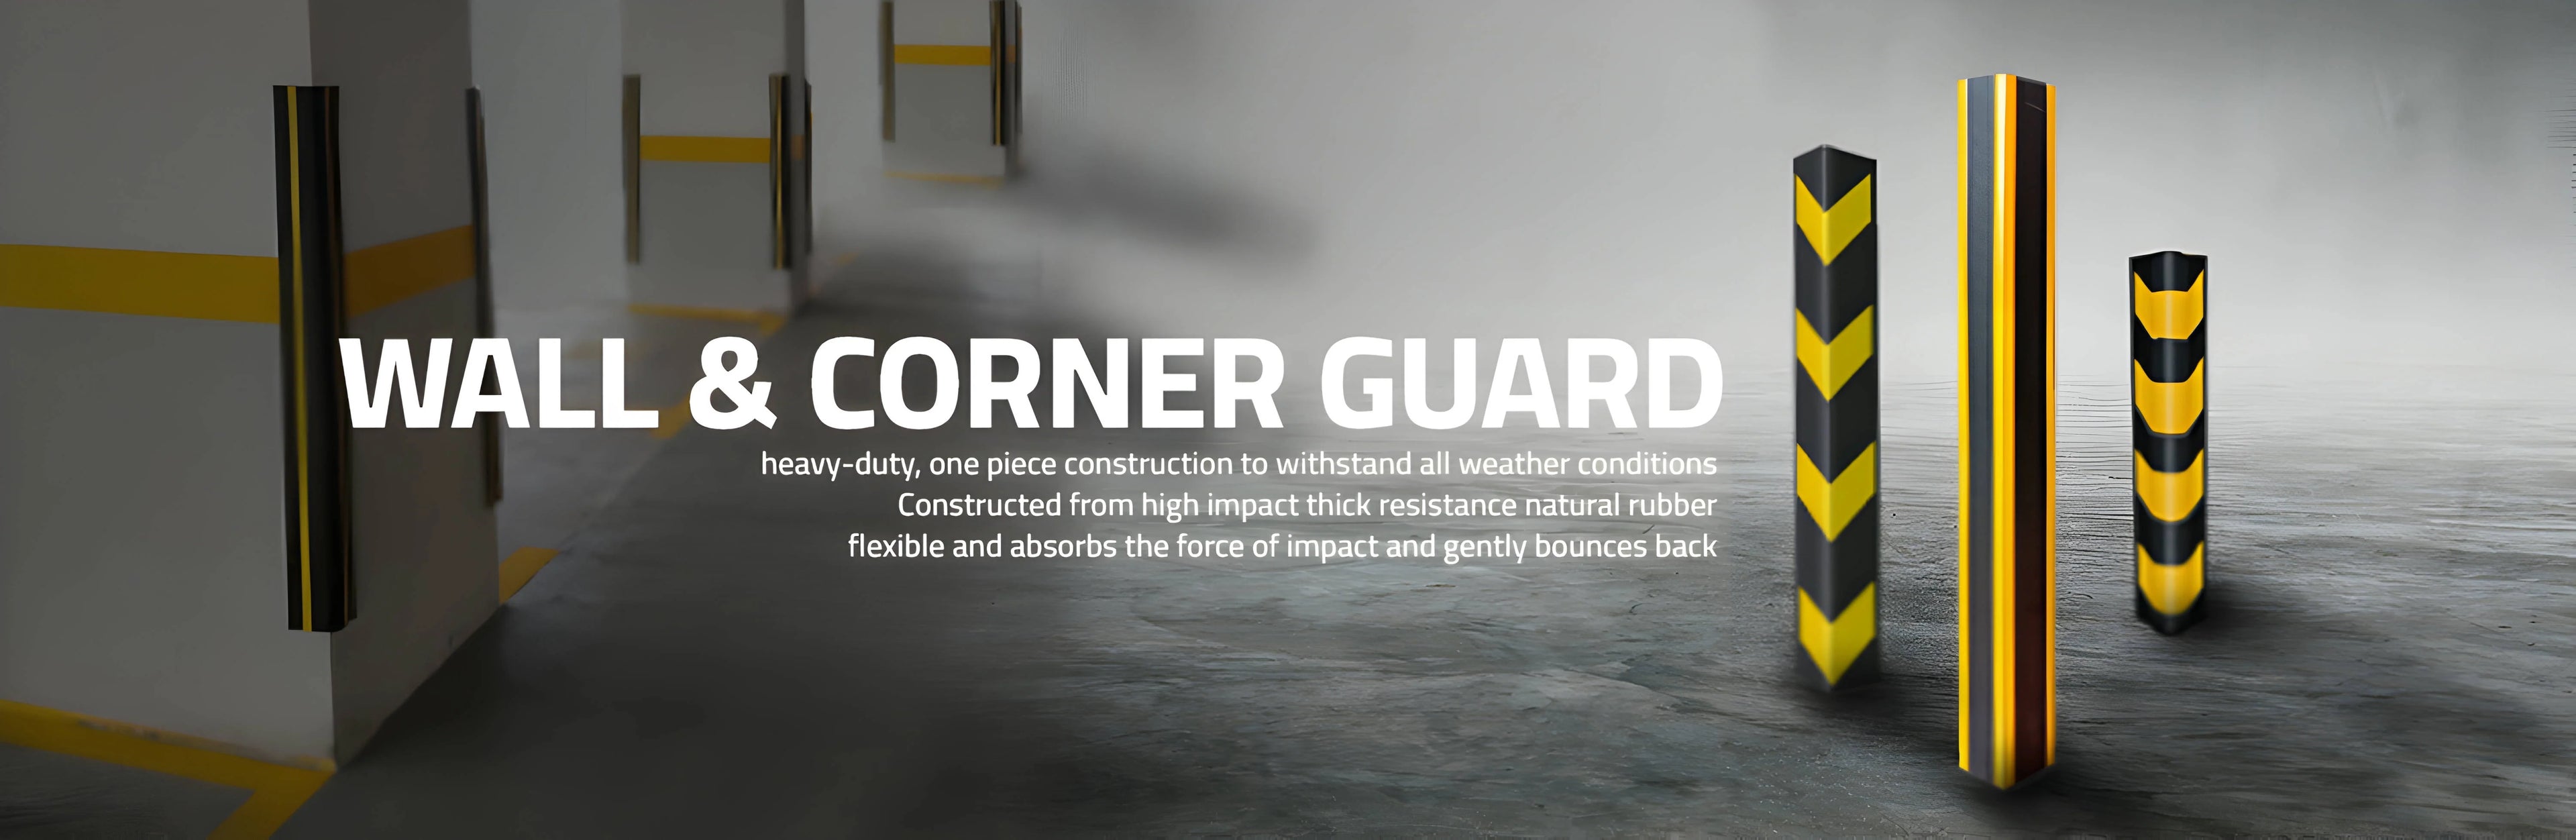 wall corner guard slider